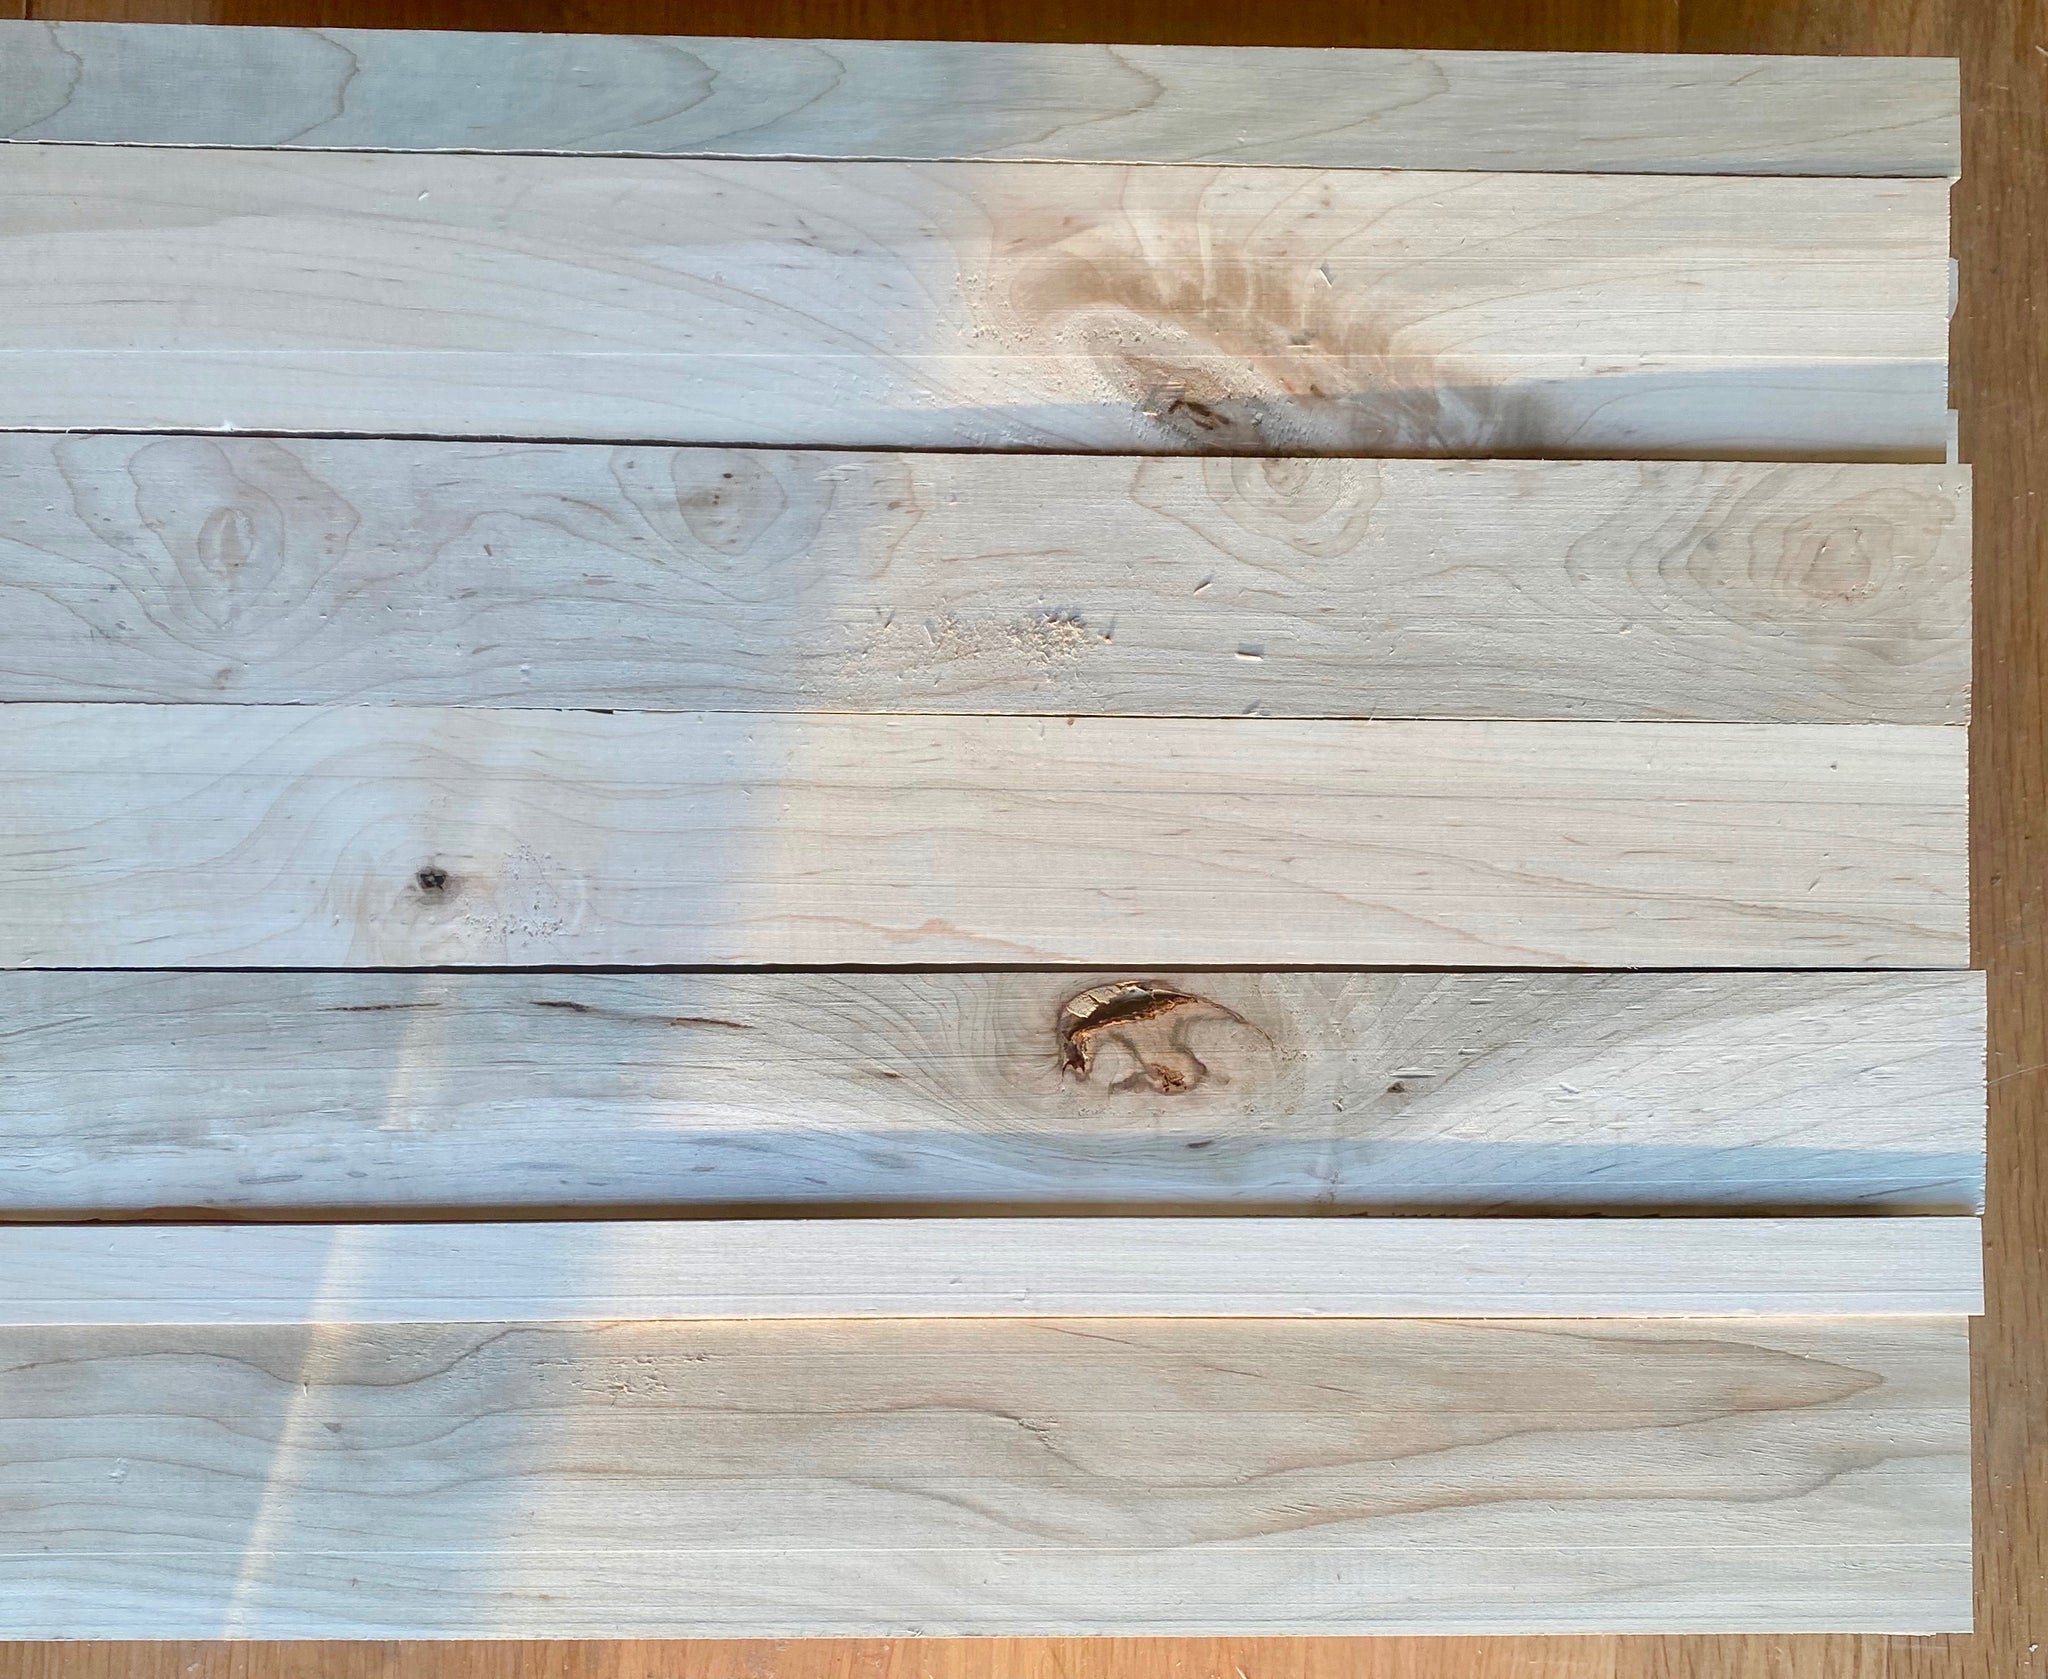  Woodchucks Wood Scrap Box of All Maple Pieces (SBCO-TINY-MAPLE)